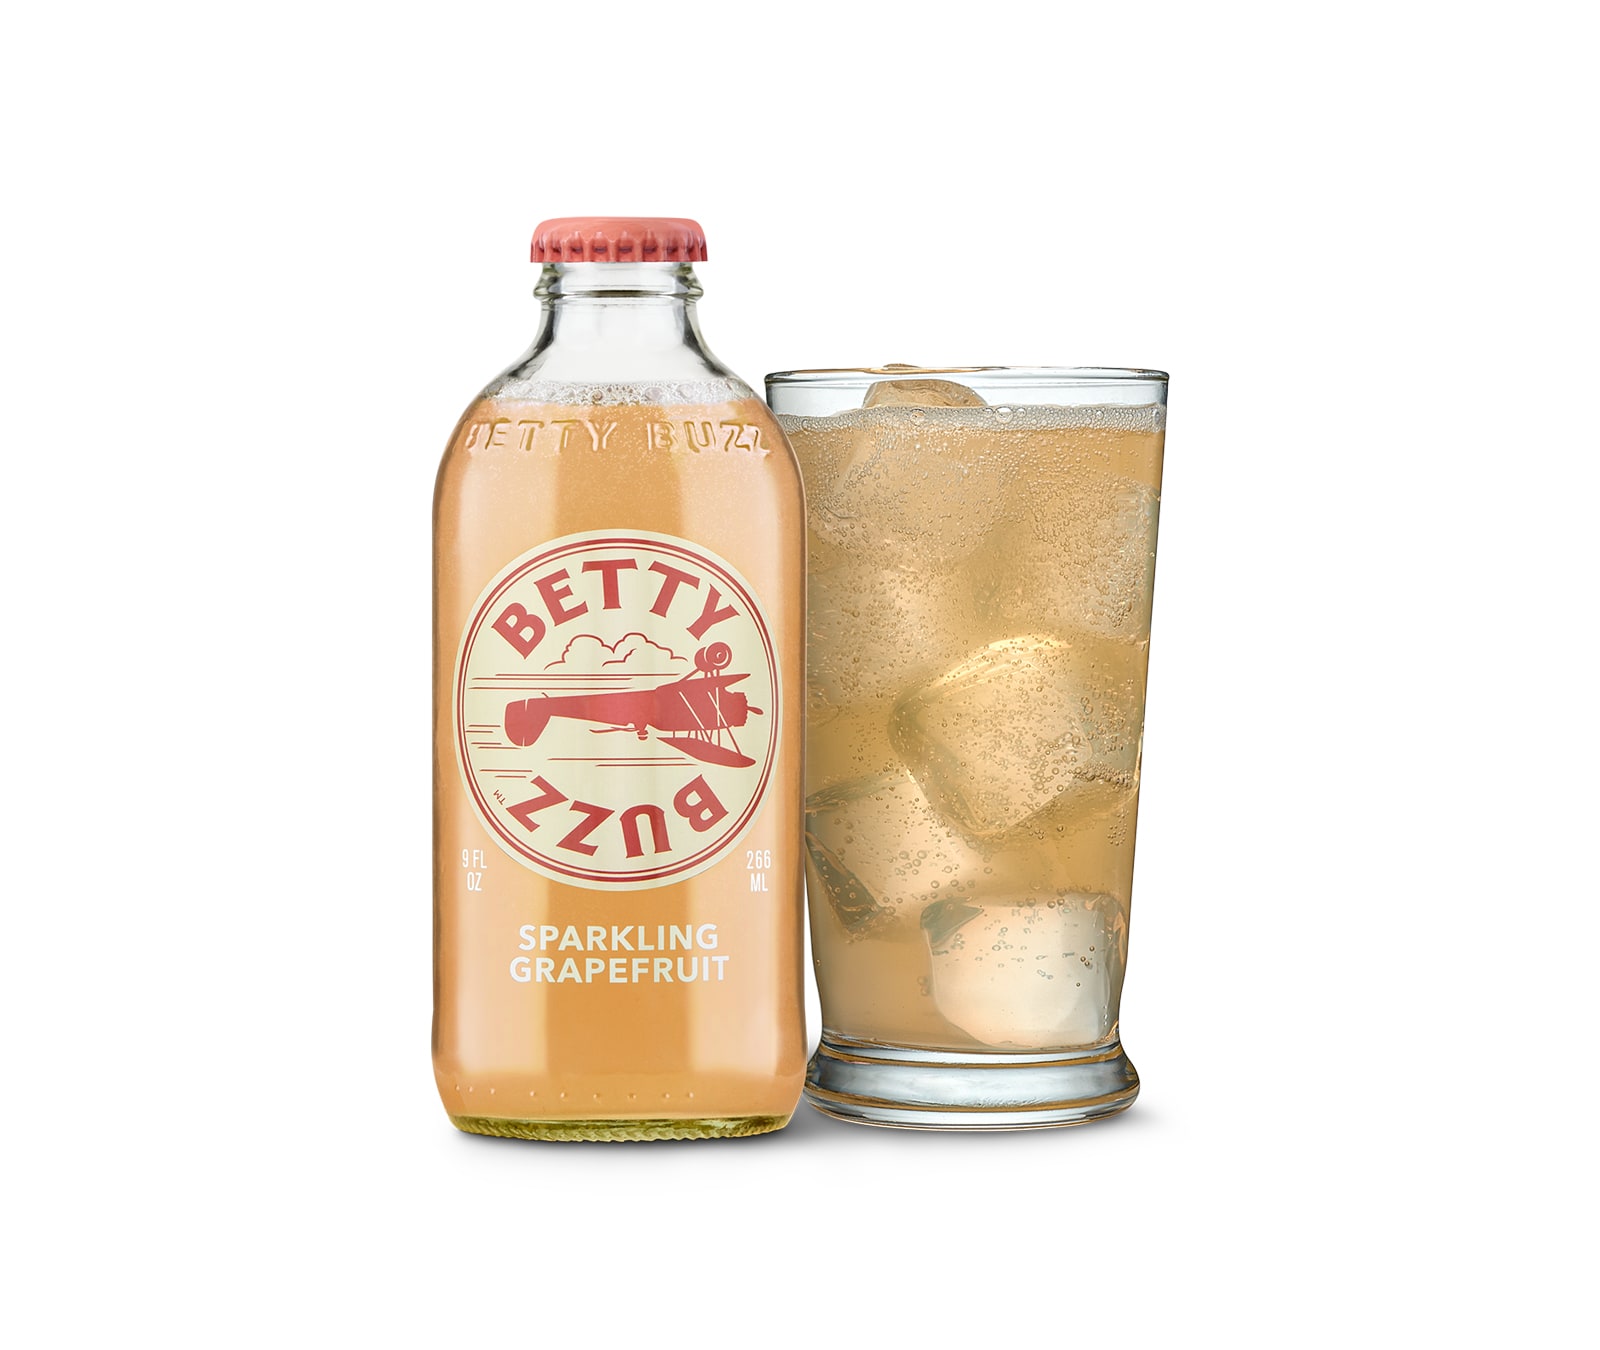 Betty Buzz Grapefruit bottle package design